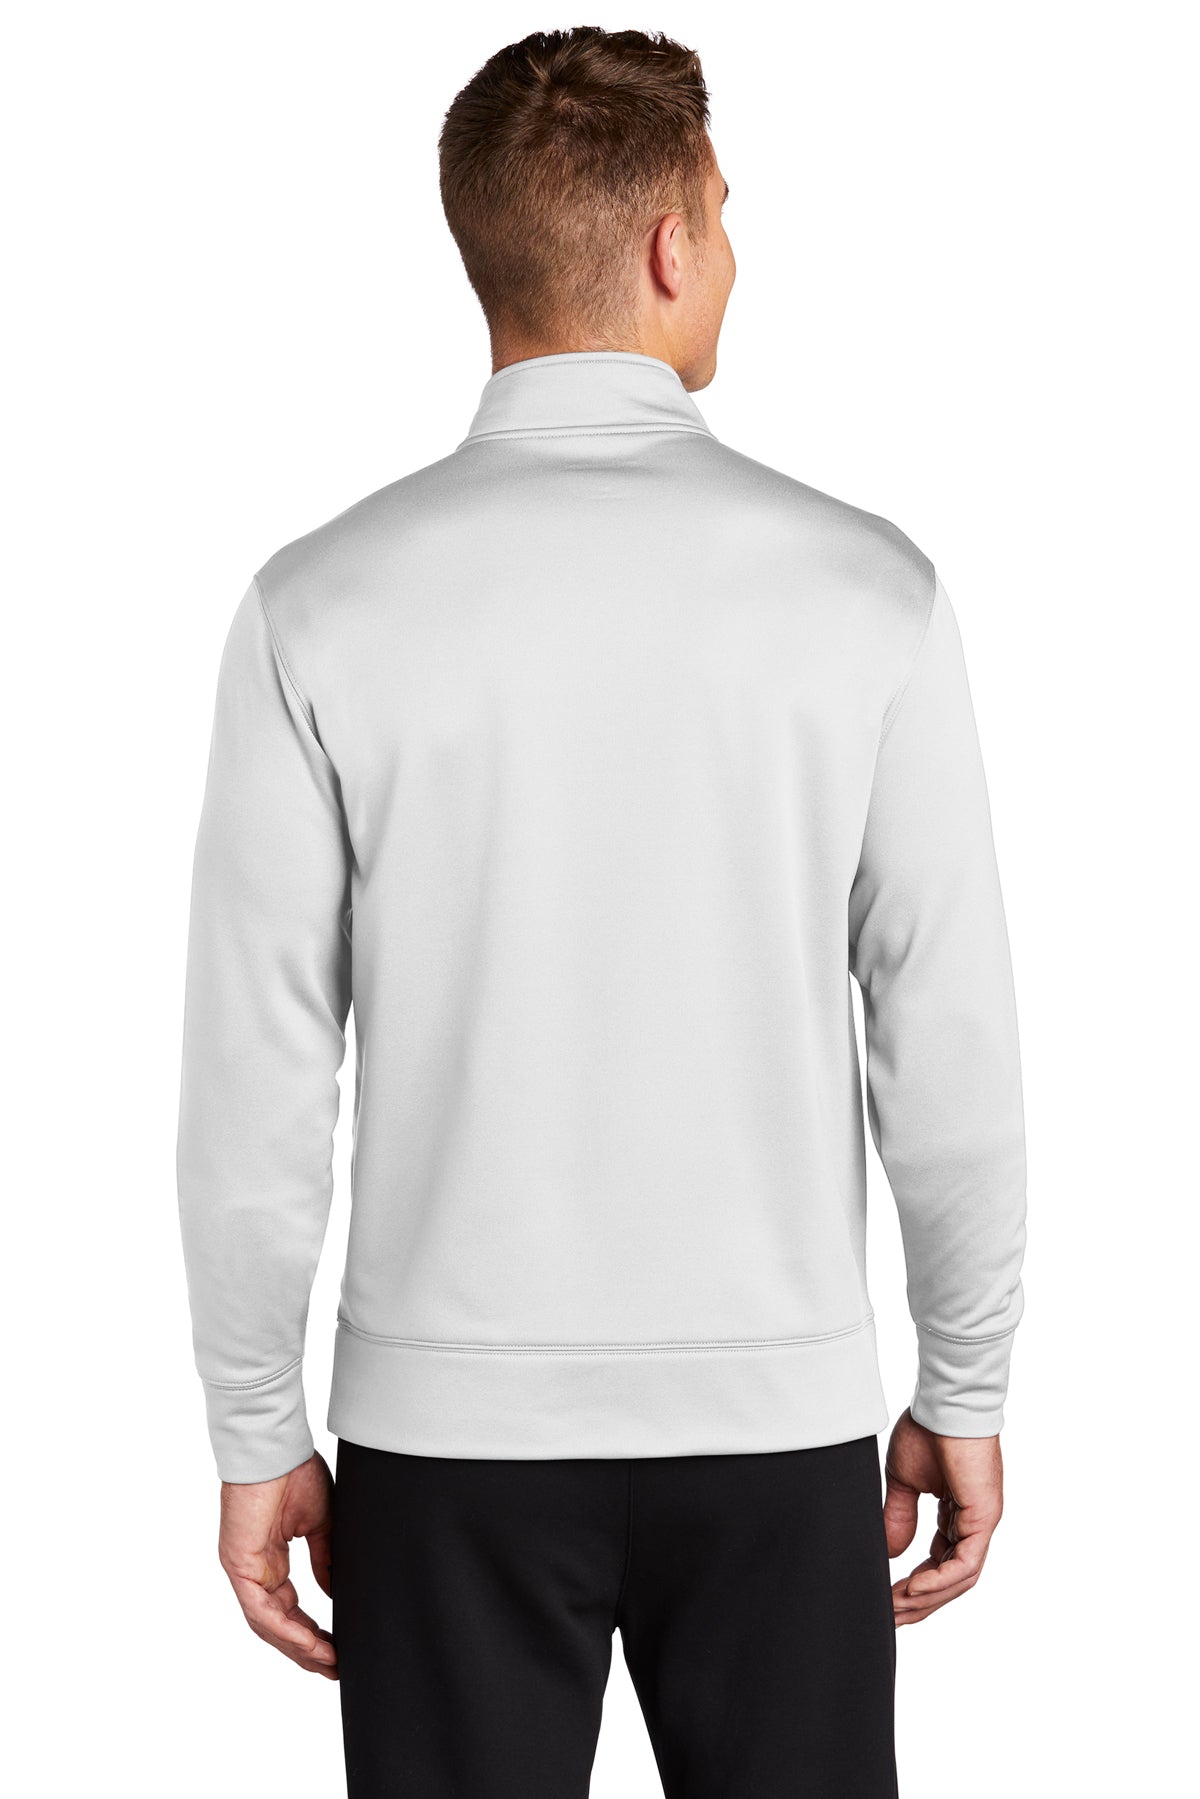 sport-tek_st241 _white_company_logo_sweatshirts